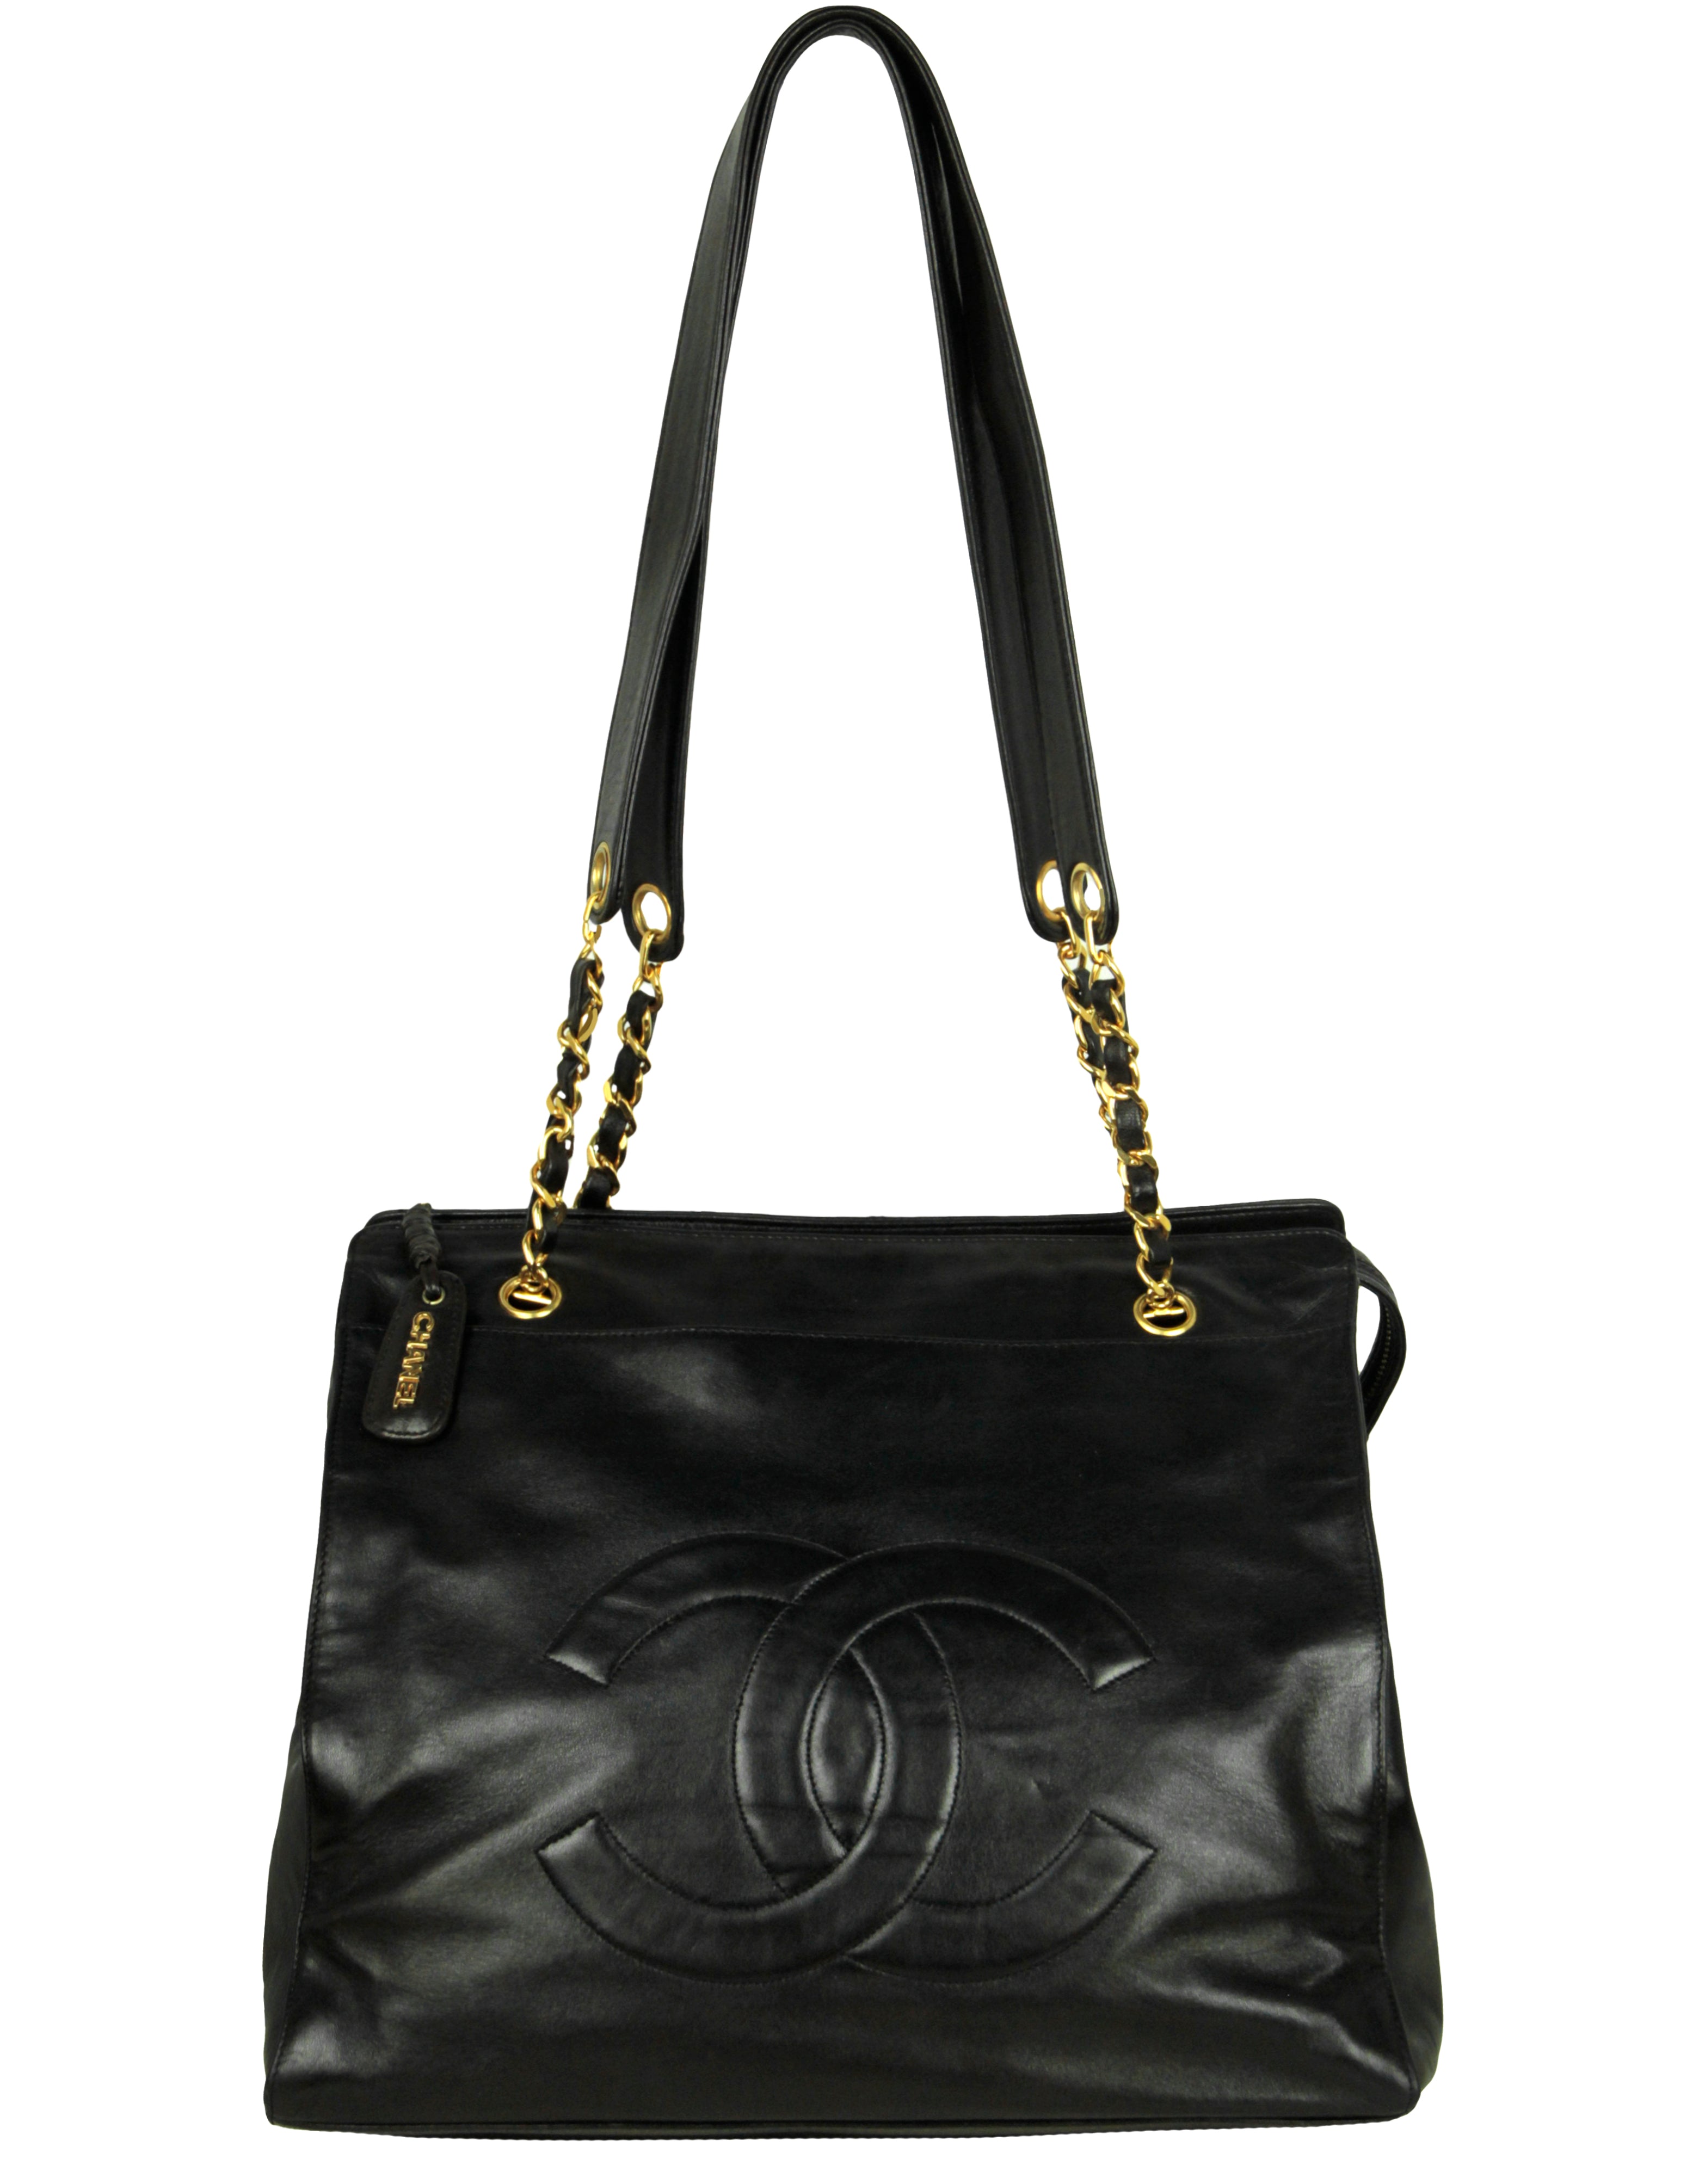 Chanel Black Vintage Lambskin Leather CC Logo Tote Bag